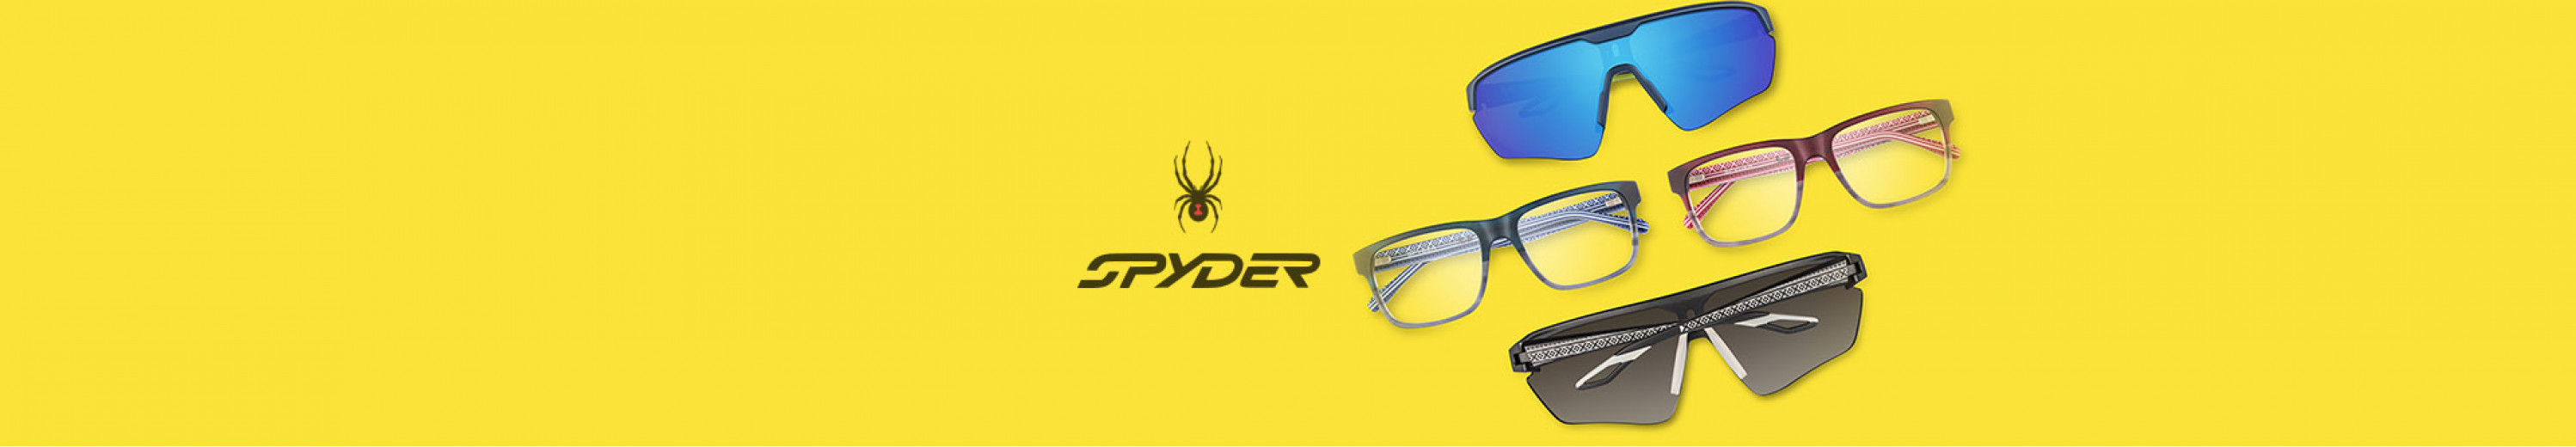 Spyder Glasses and Eyewear